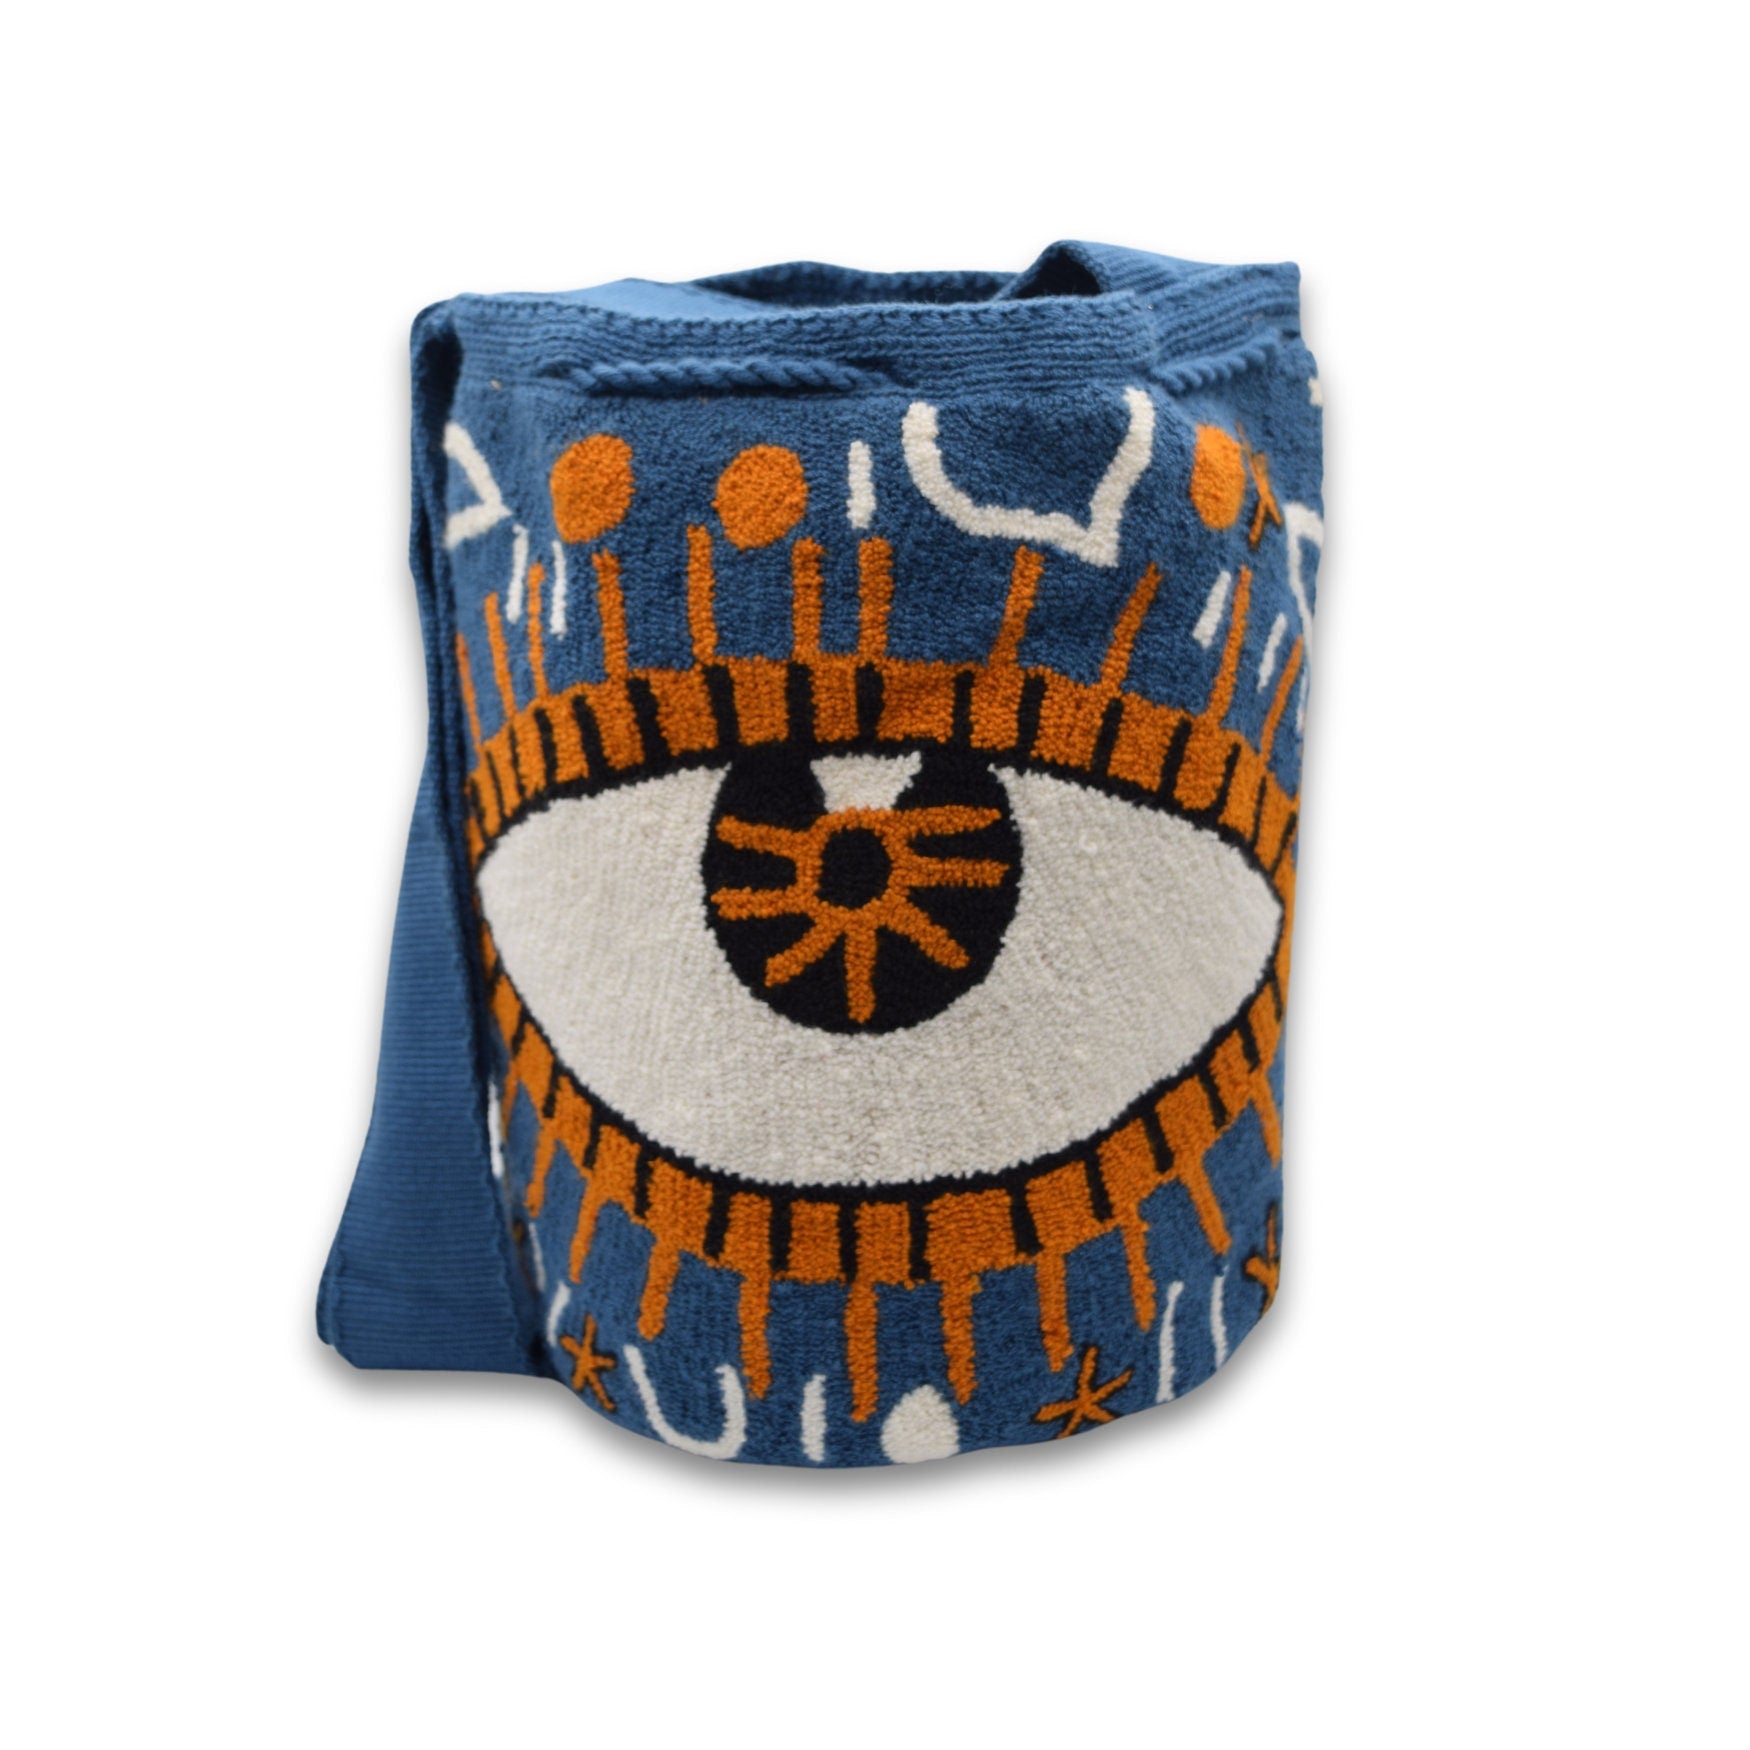 Wayuu Mochila Bag | Large Tapizada | Handmade in Colombia | Dark Steel blue, Orange Evil Lucky Awaken Eye